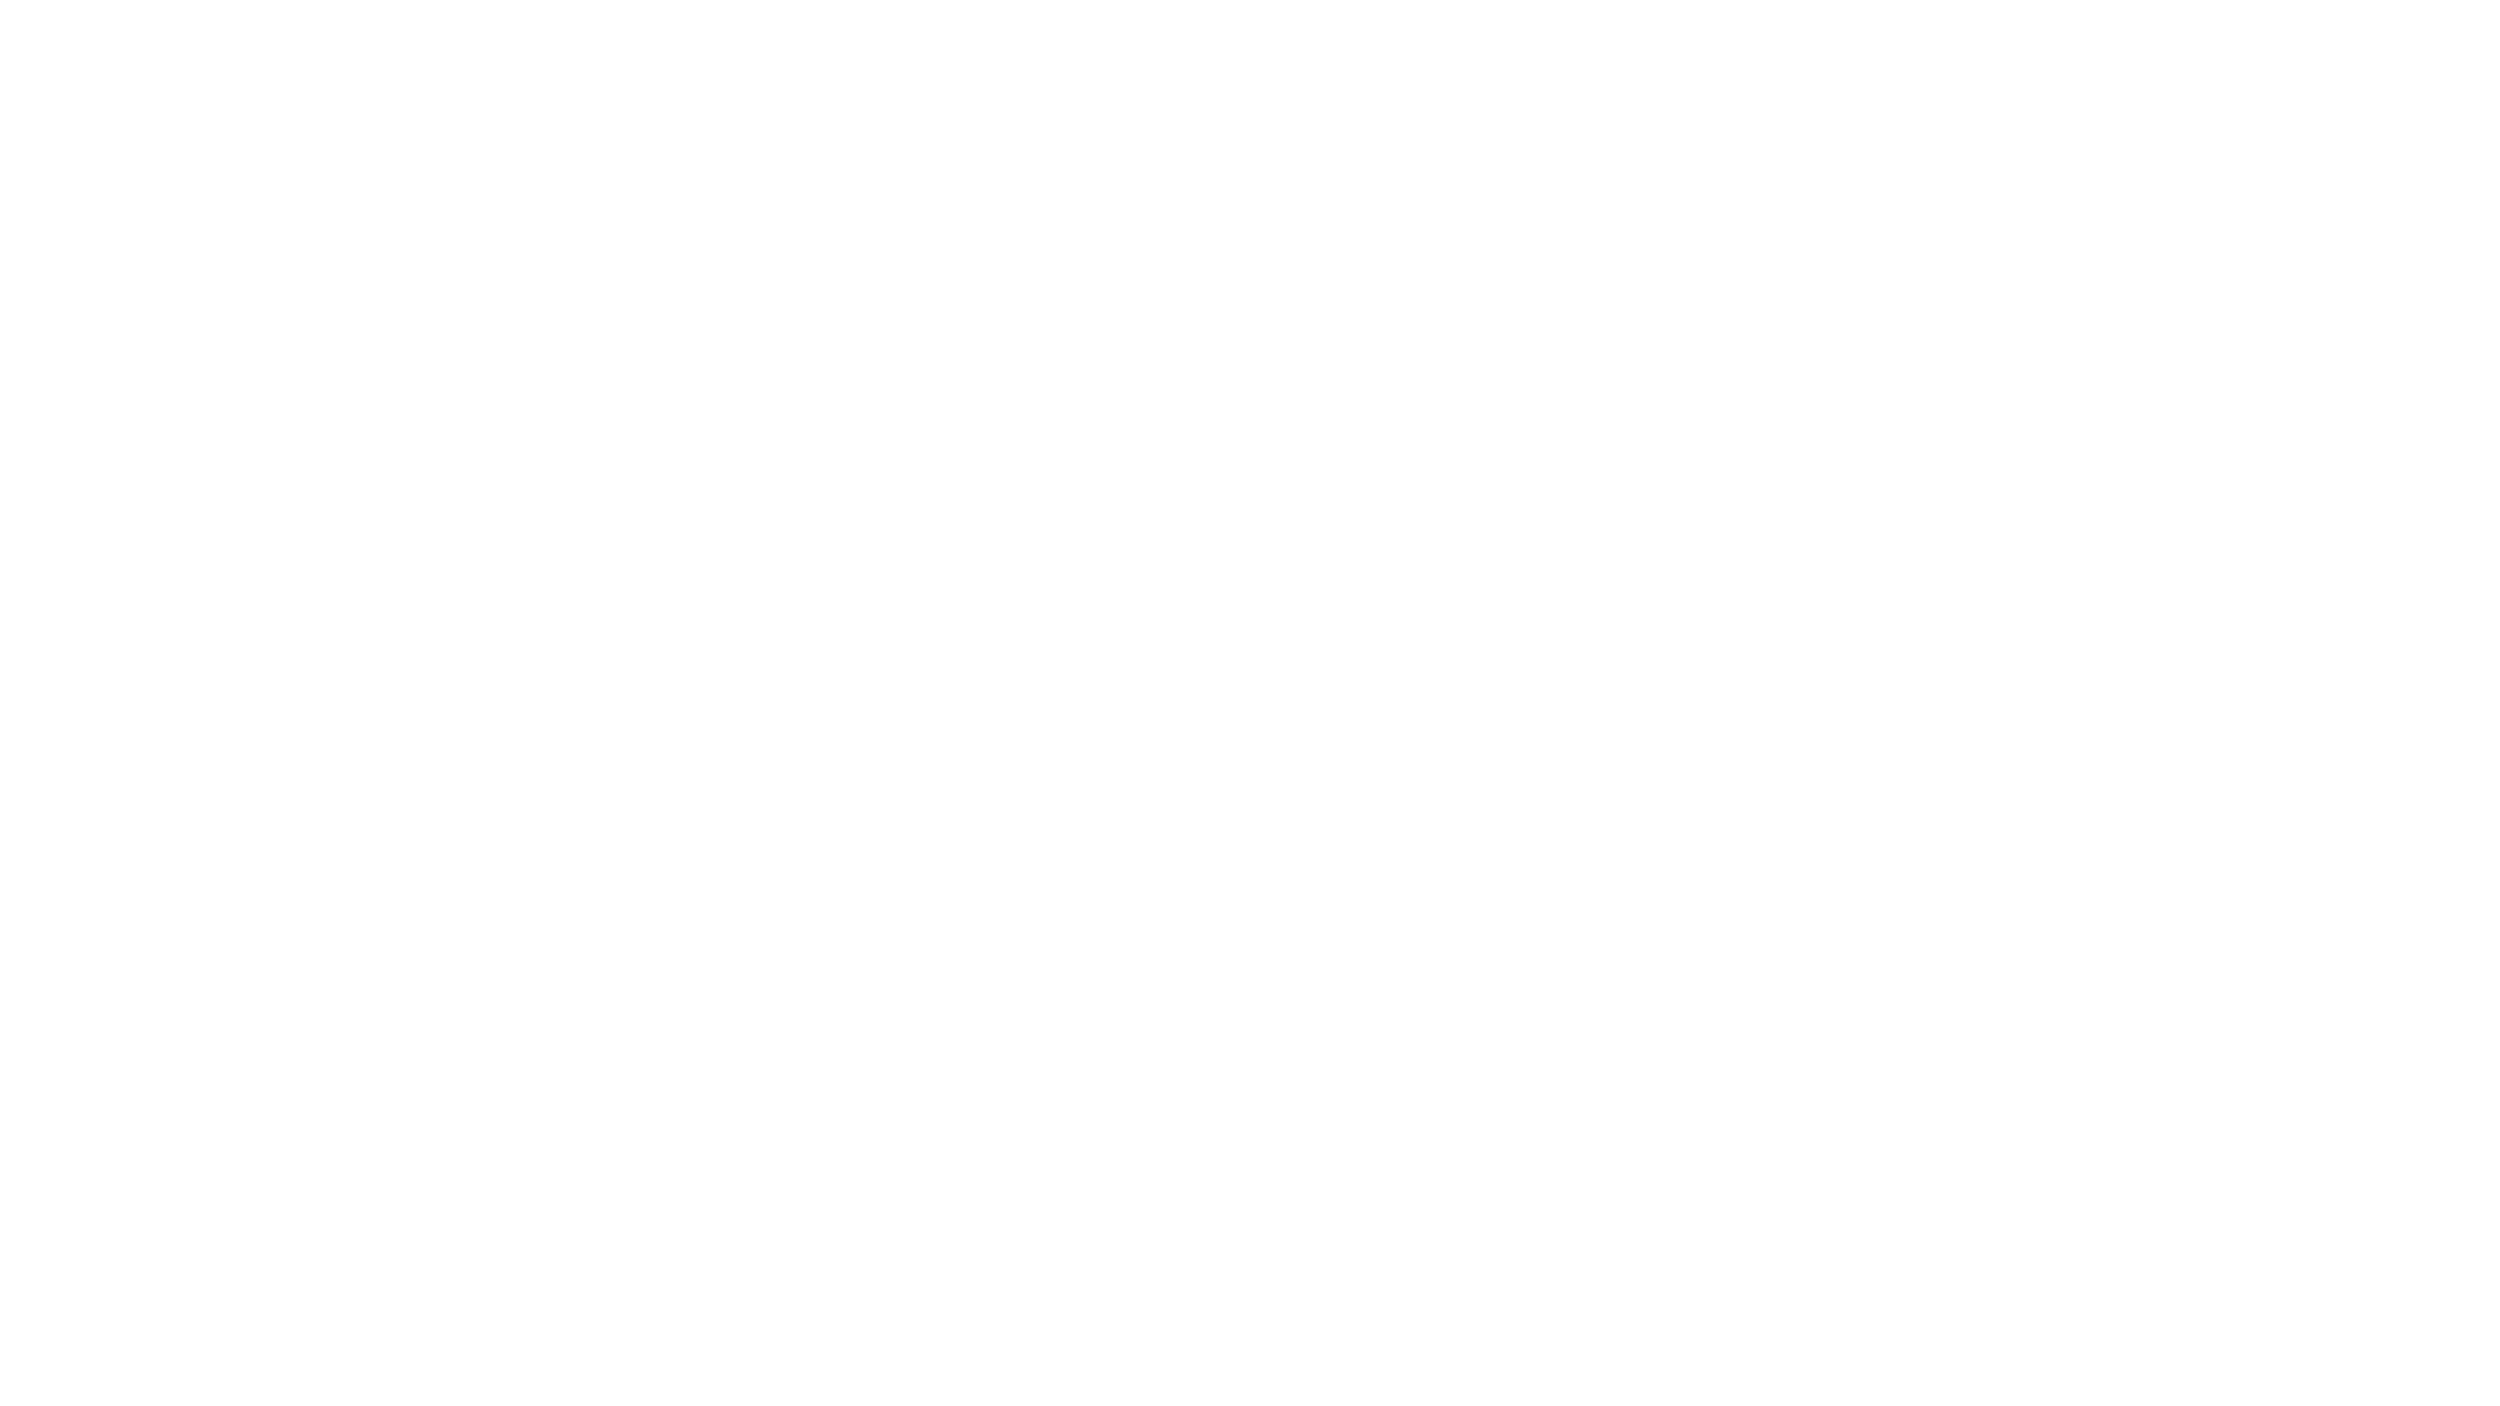 Miller Visual